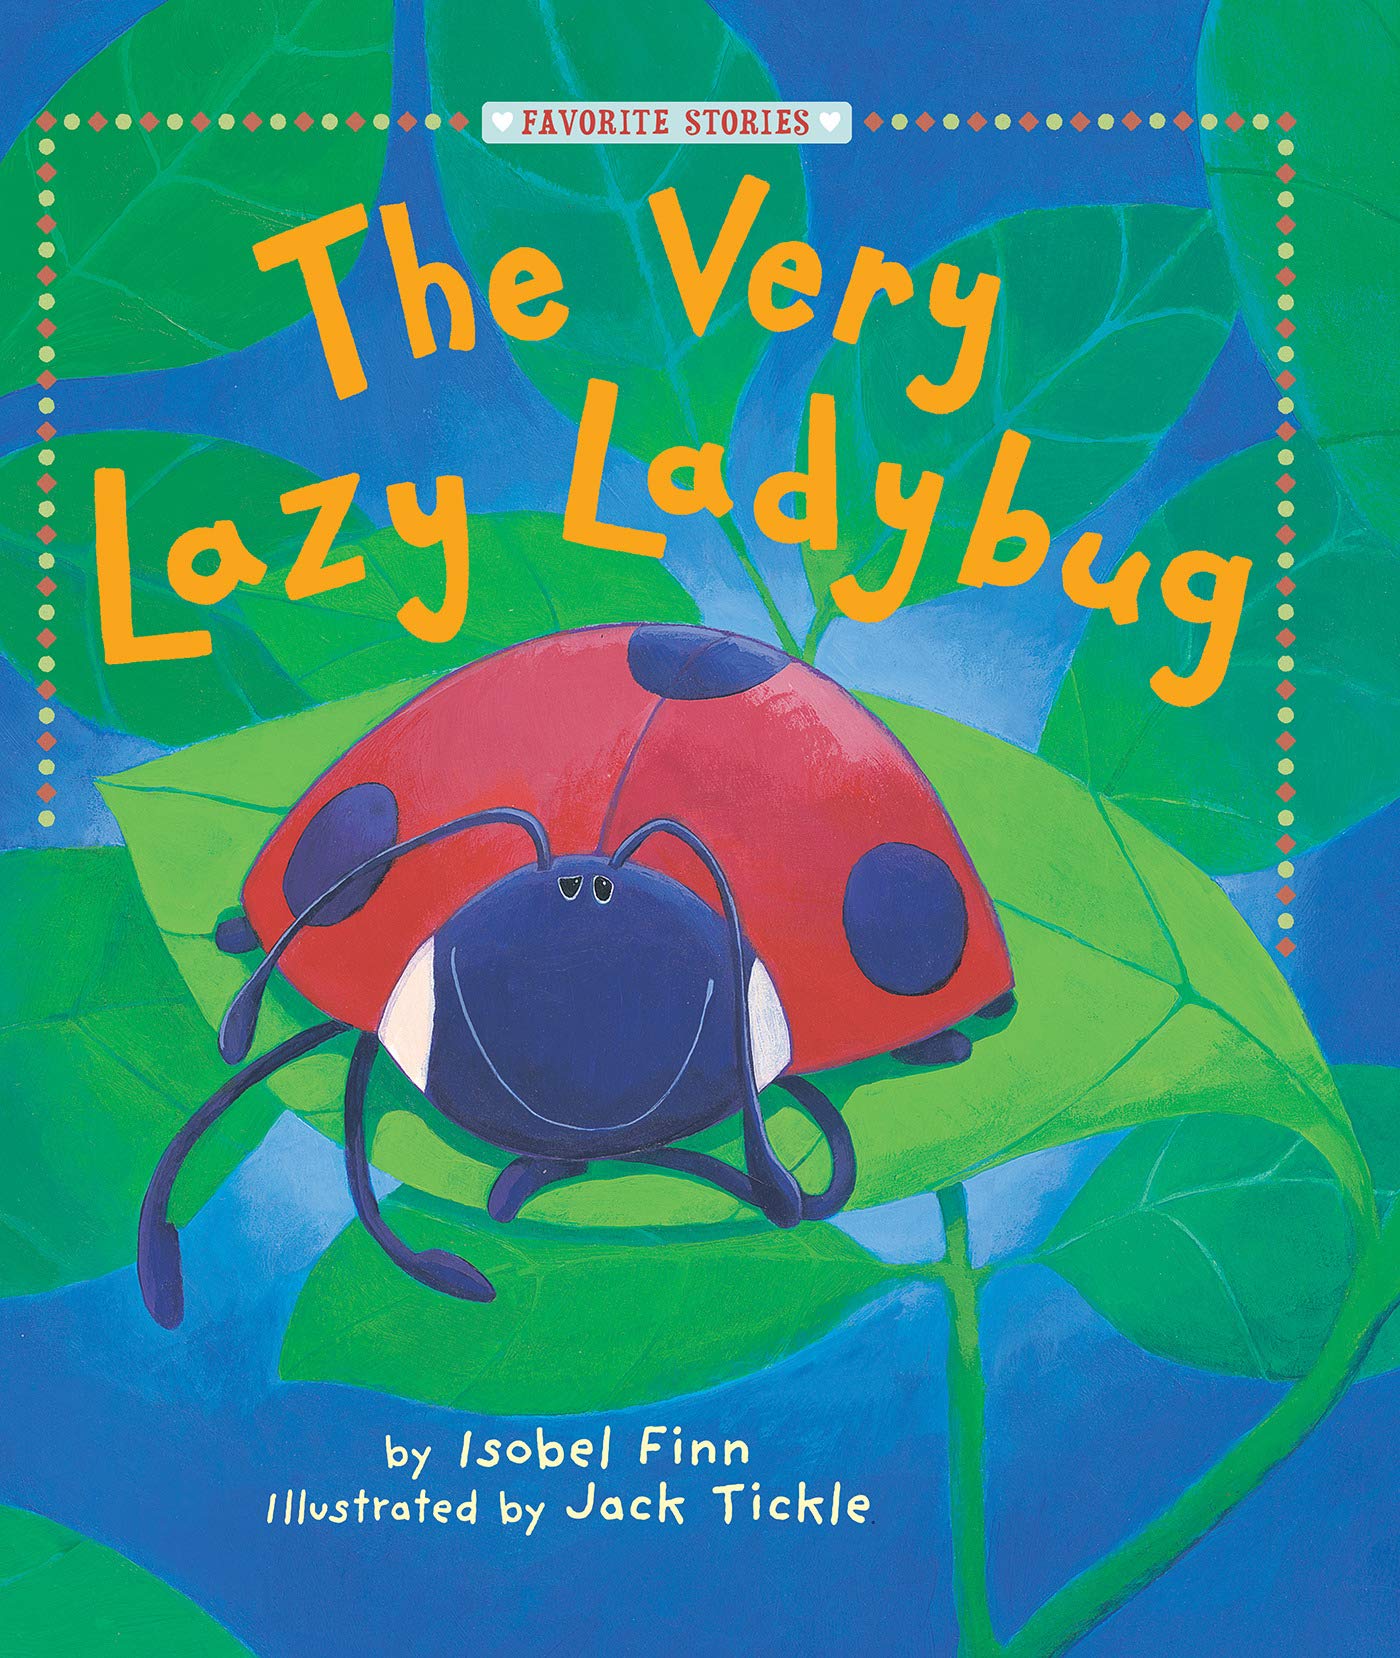 The very lazy ladybug